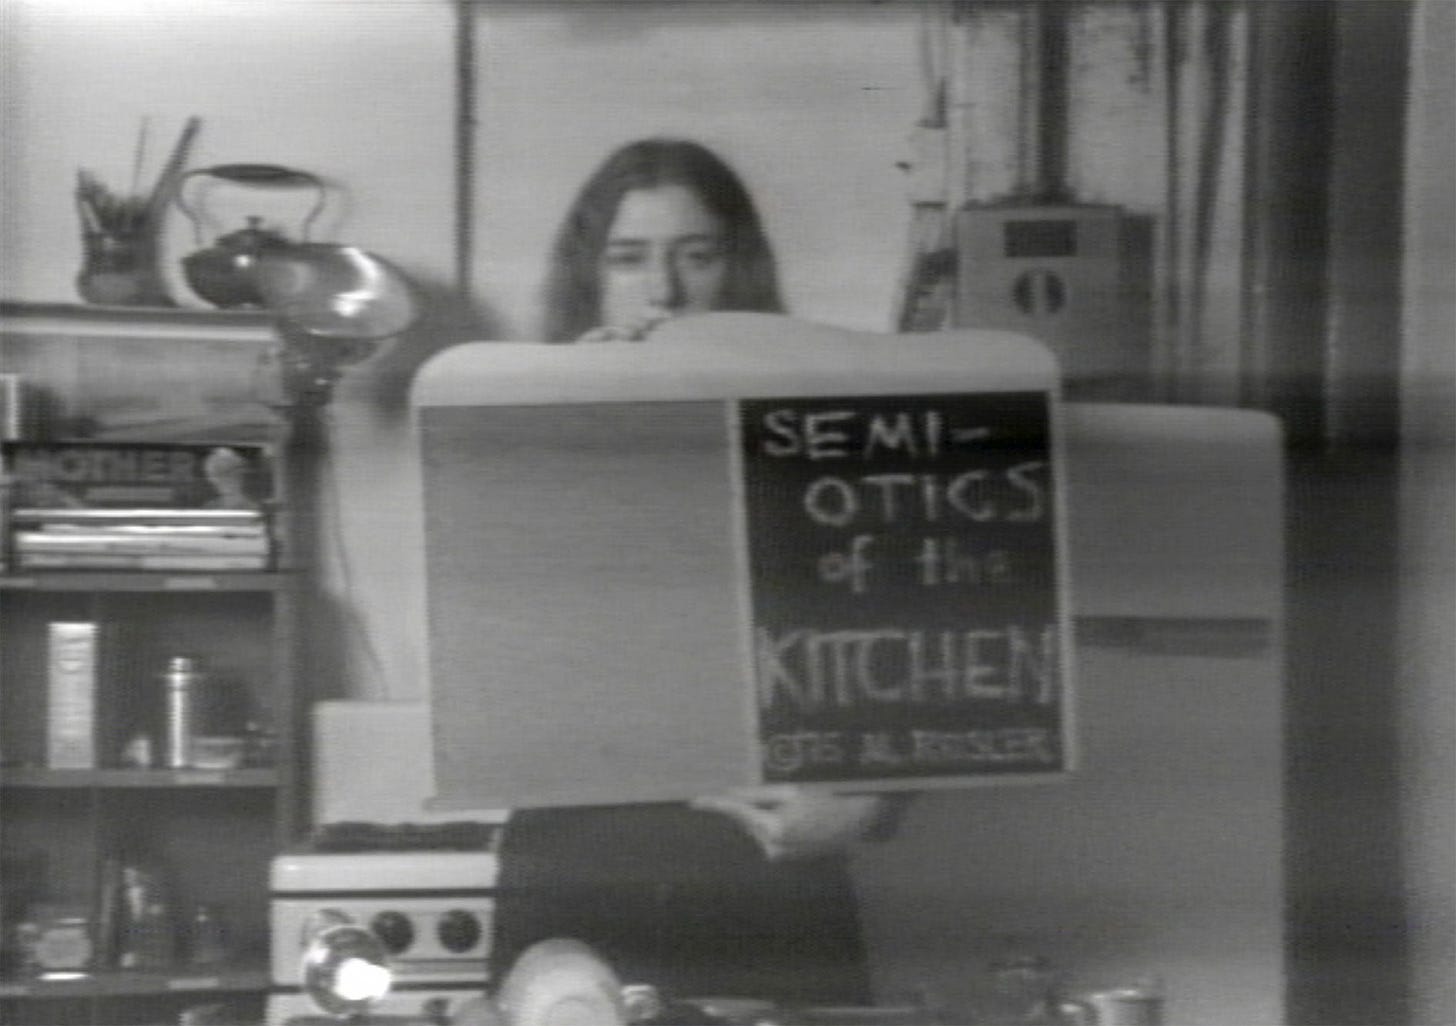 Martha Rosler invented the Semiotics of the Kitchen